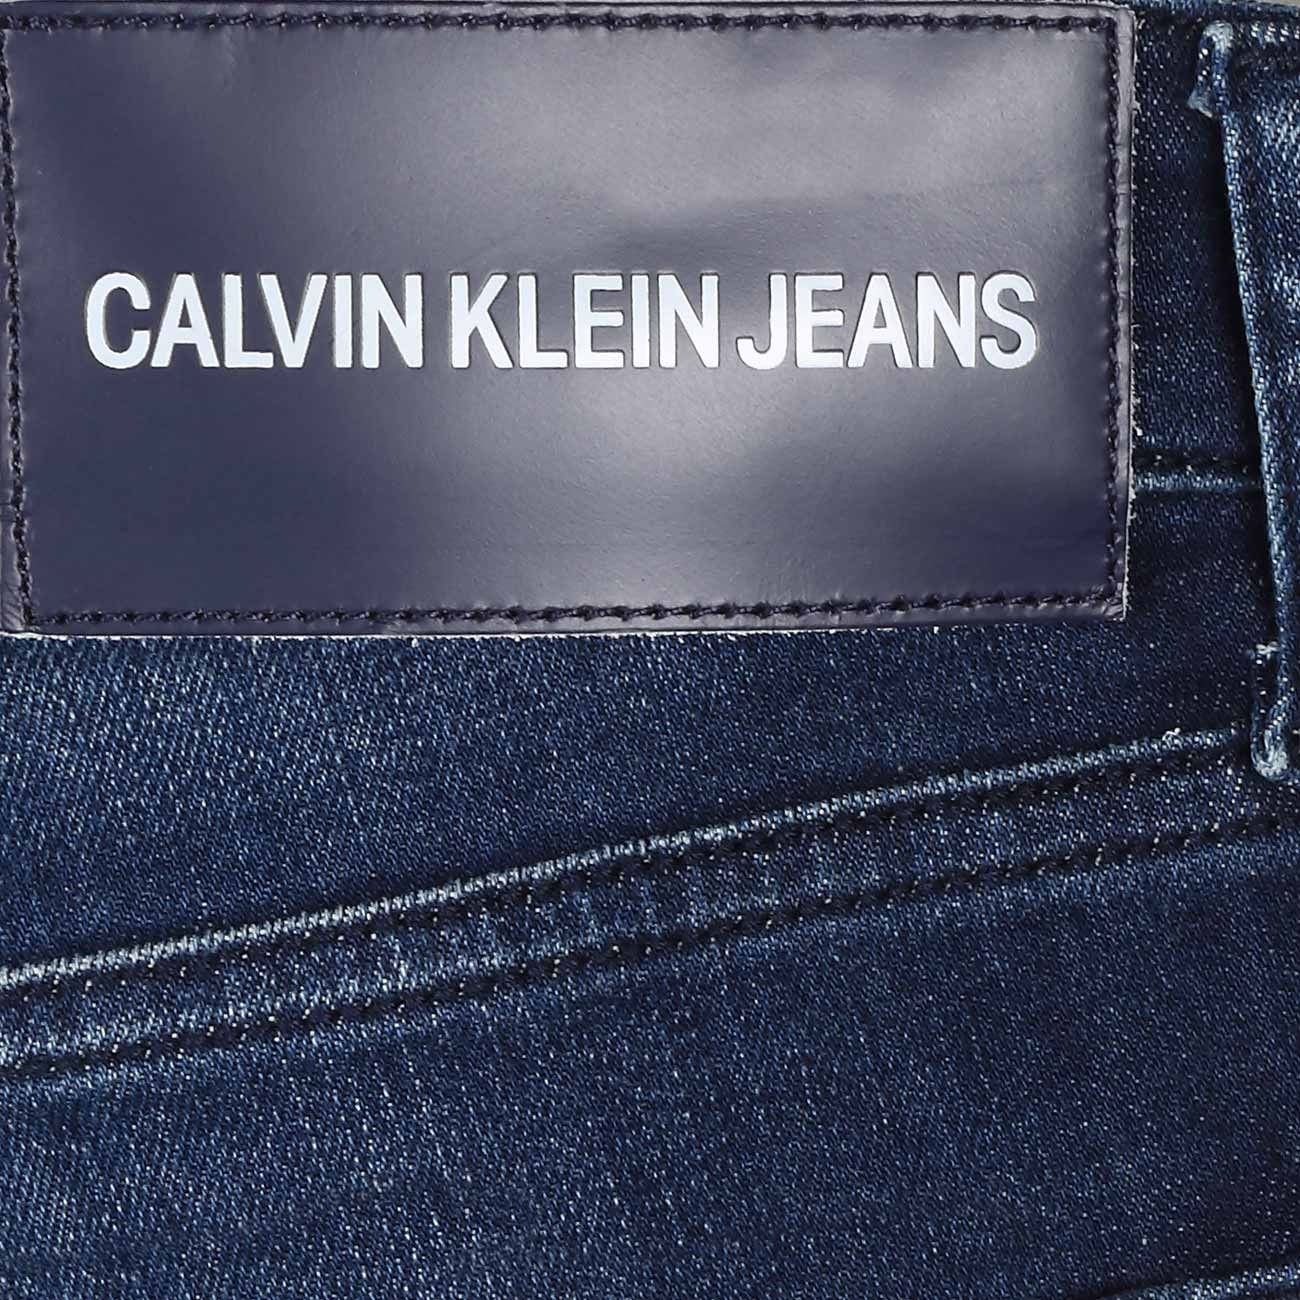 Kom forbi for at vide det Rullesten visdom Calvin Klein Modern Classic Jeans Shop, SAVE 53% - mpgc.net